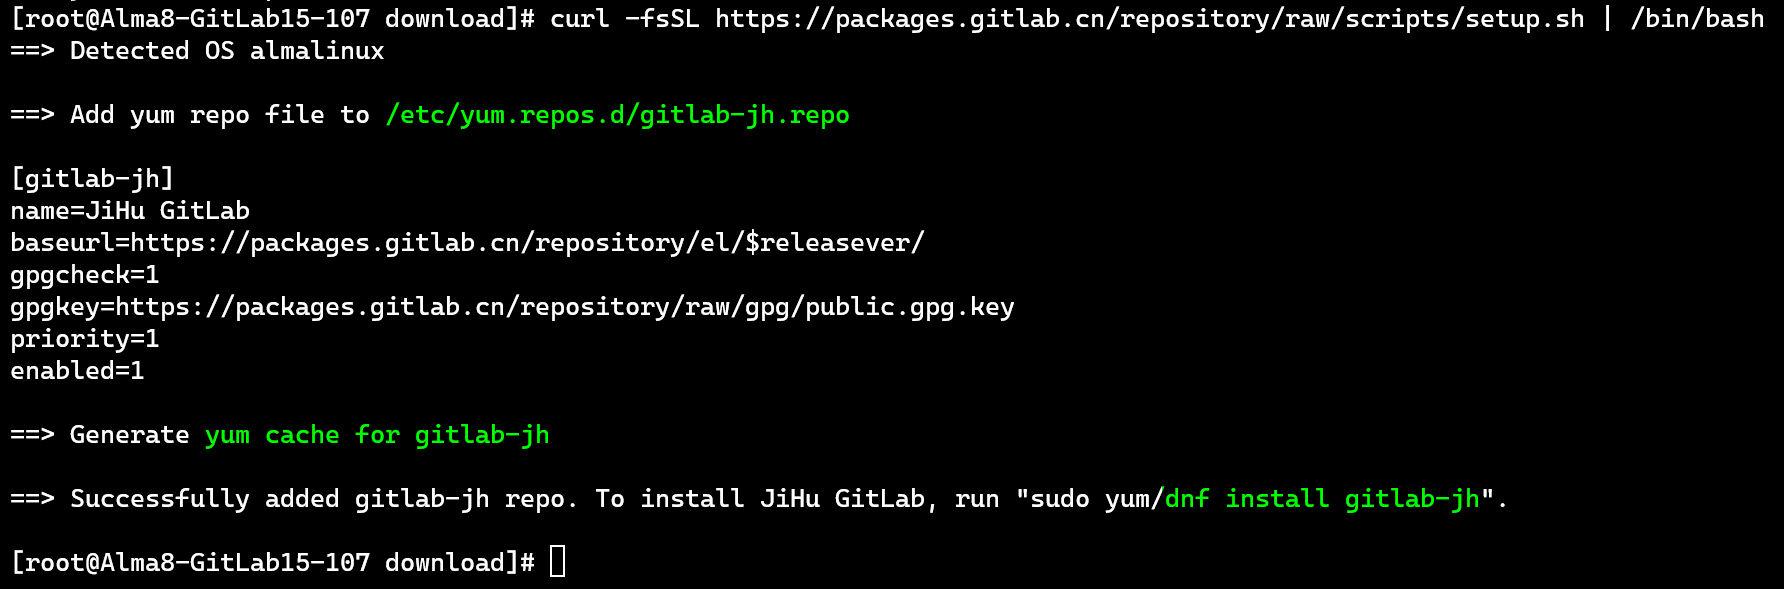 GitLab私有化部署 - CI/CD - 持续集成/交付/部署 - 源代码托管 & 自动化部署